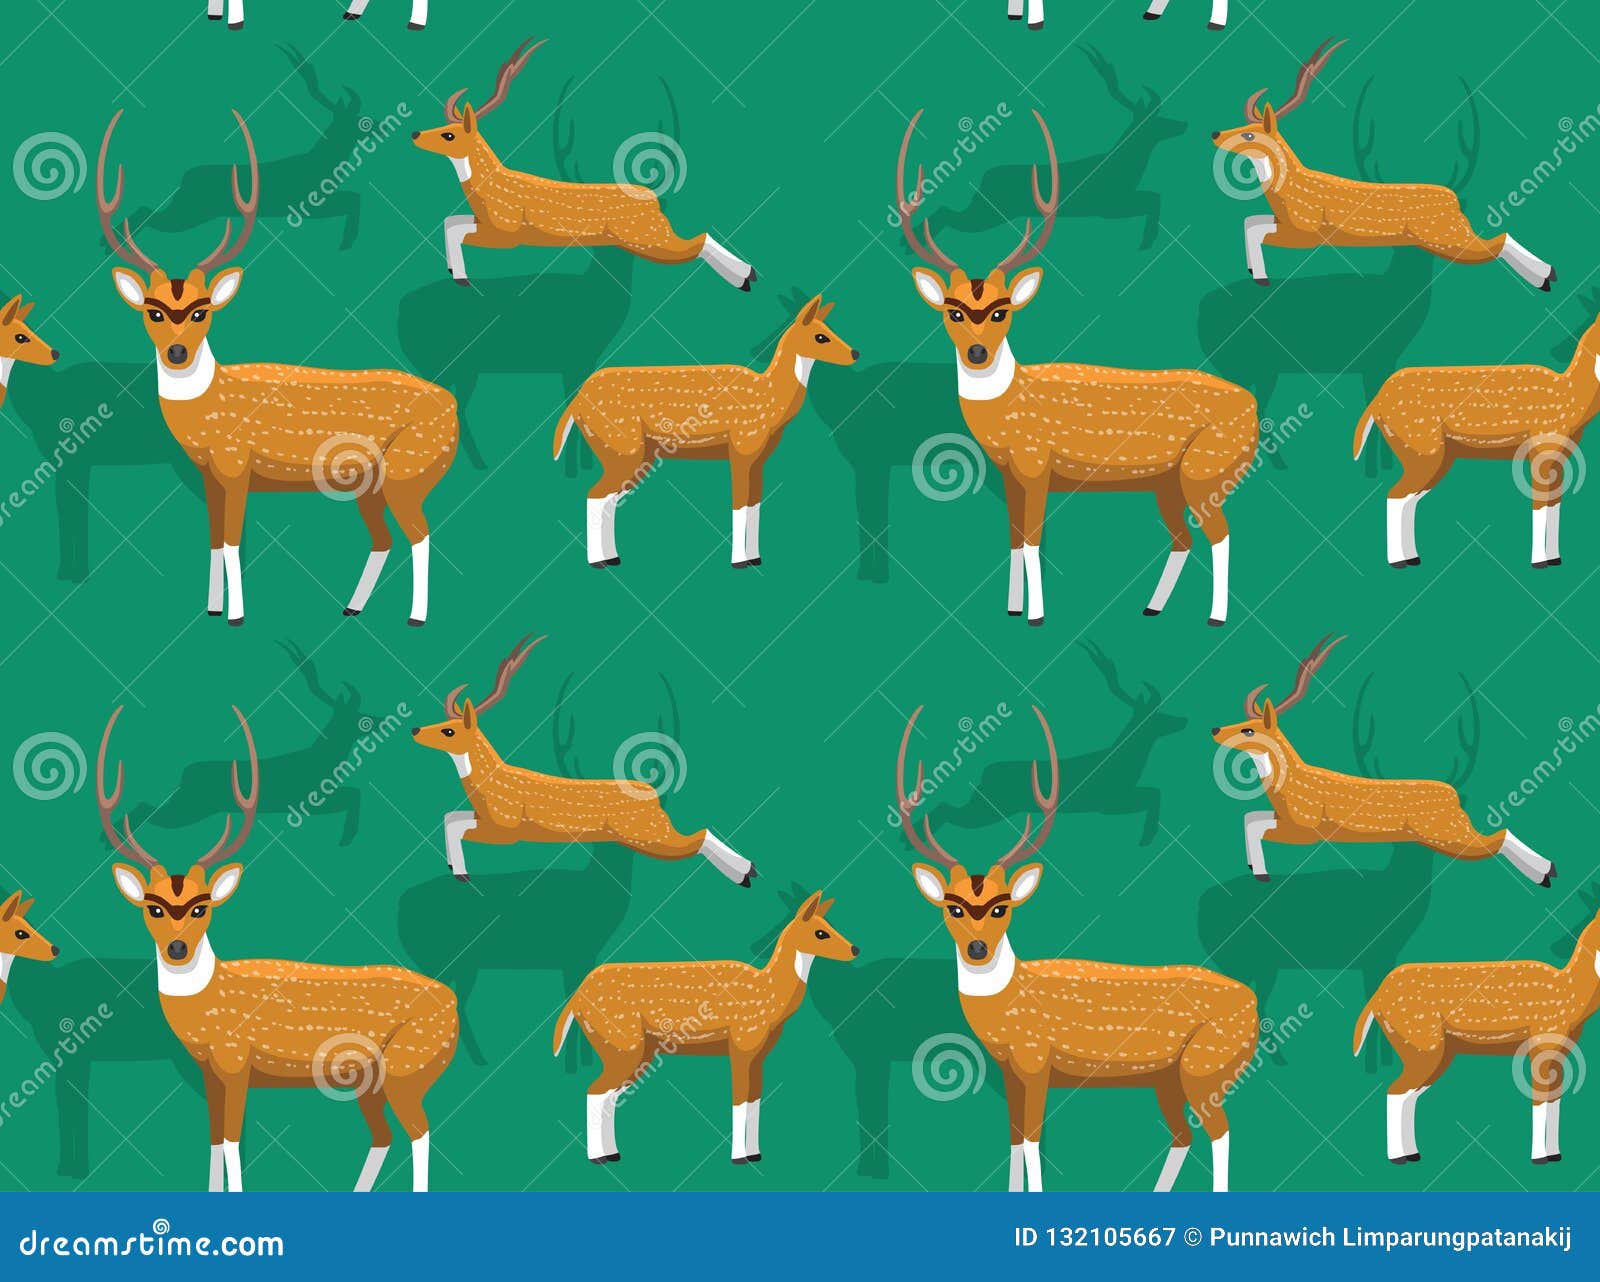 Deer Chital Cartoon Background Seamless Wallpaper Stock Vector -  Illustration of chital, pattern: 132105667